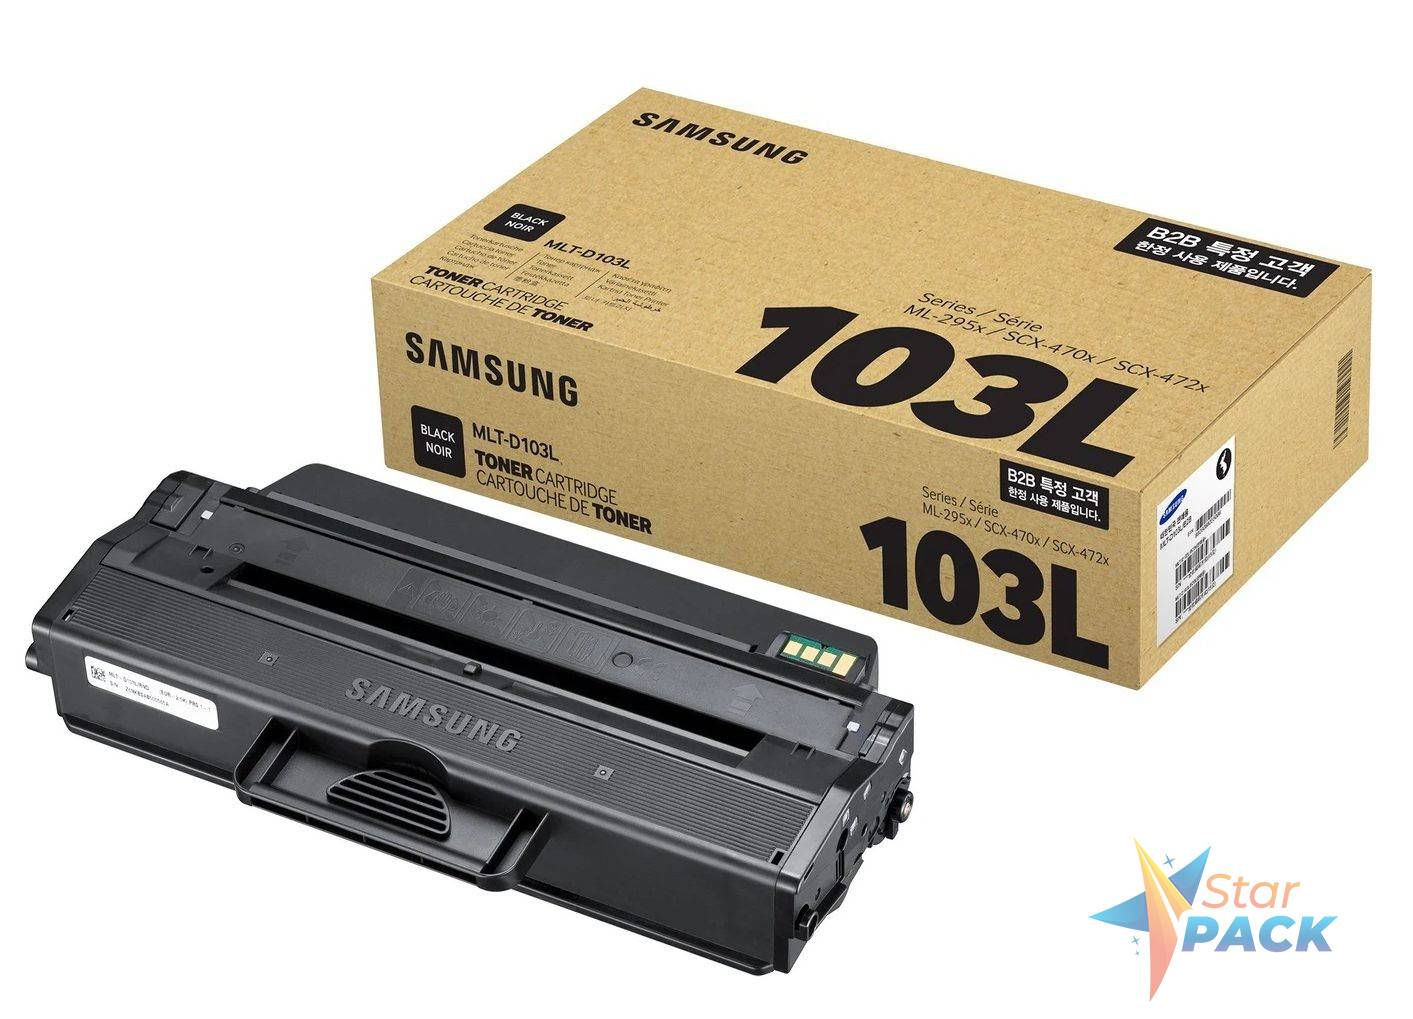 Toner Original Samsung Black, D103L, pentru ML-2950|2955|SCX-4705|4727|4728|4729 , 2.5K